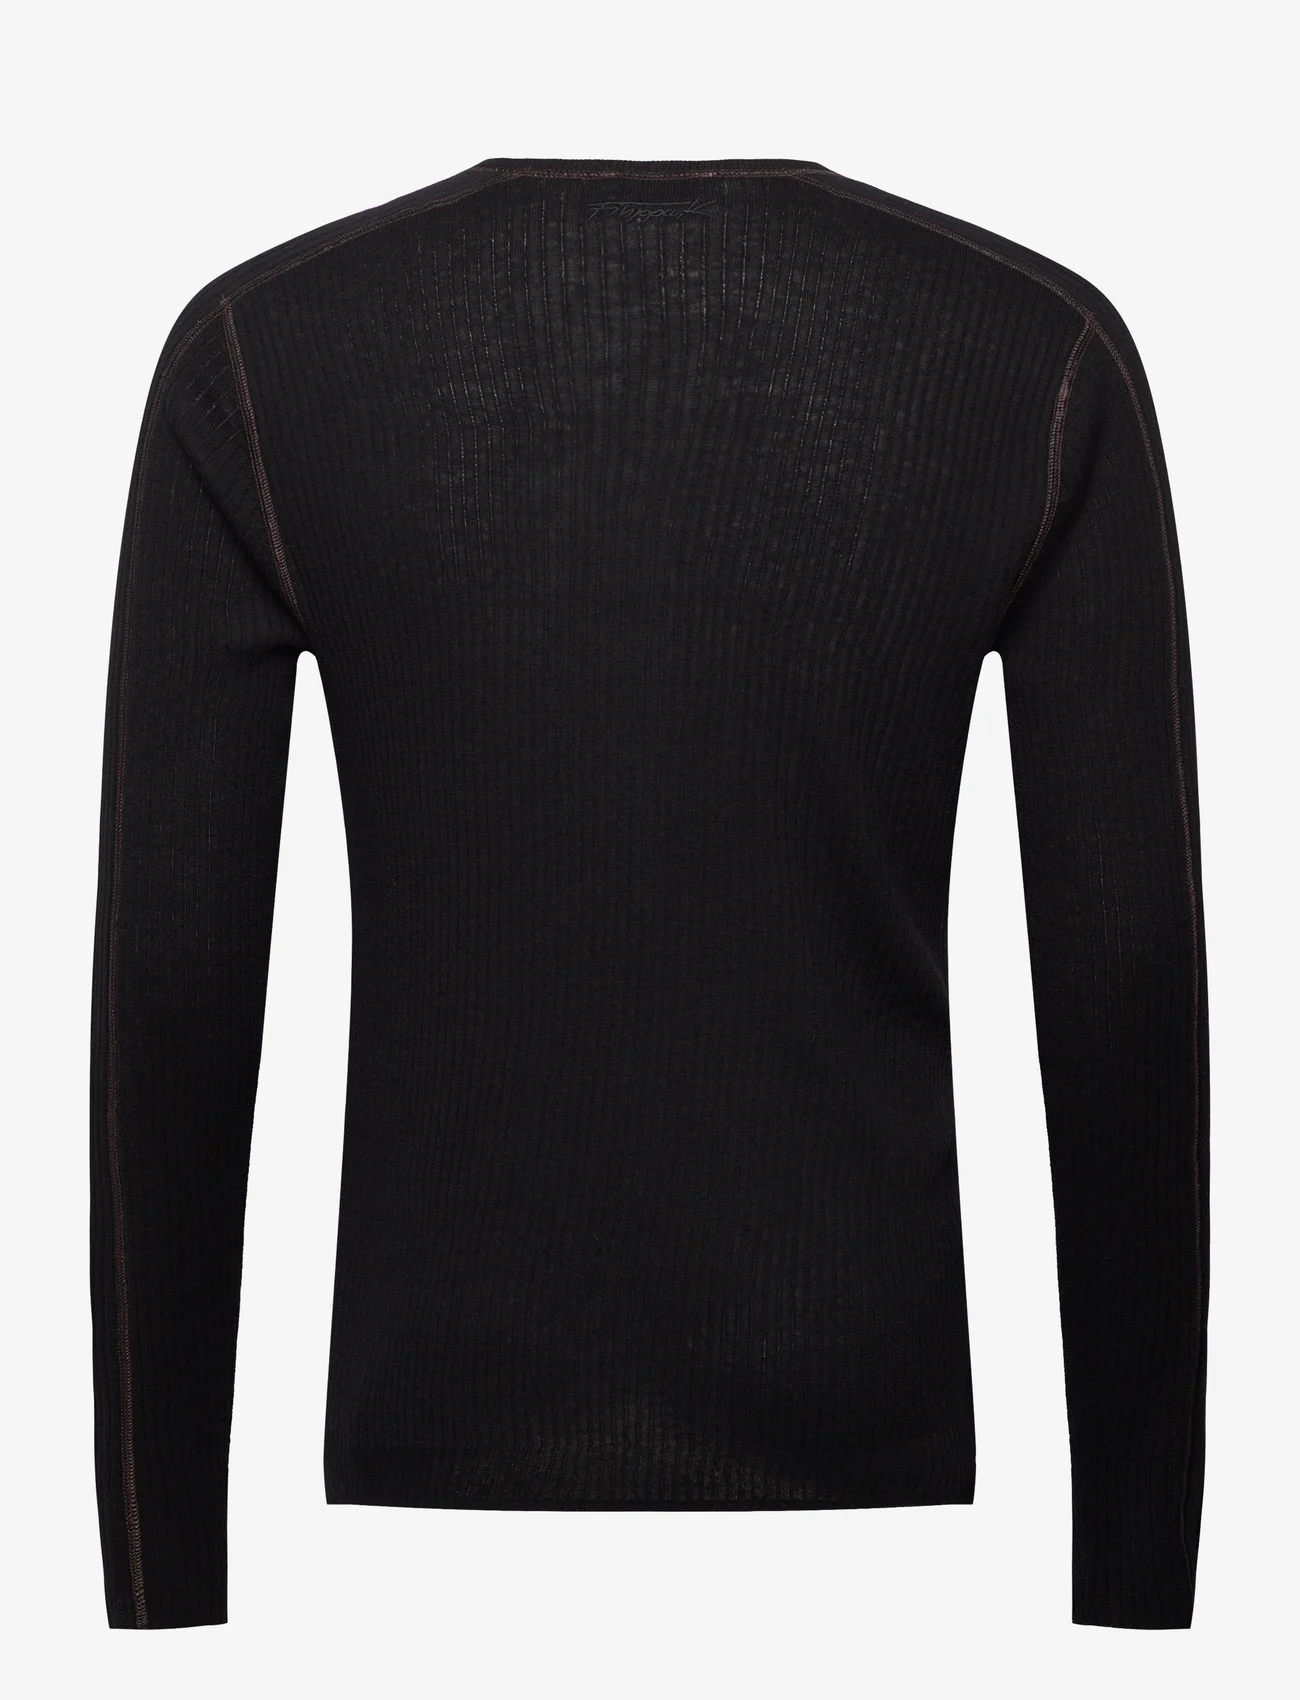 Filippa K - Light Rib Sweater - nordic style - black/brow - 1